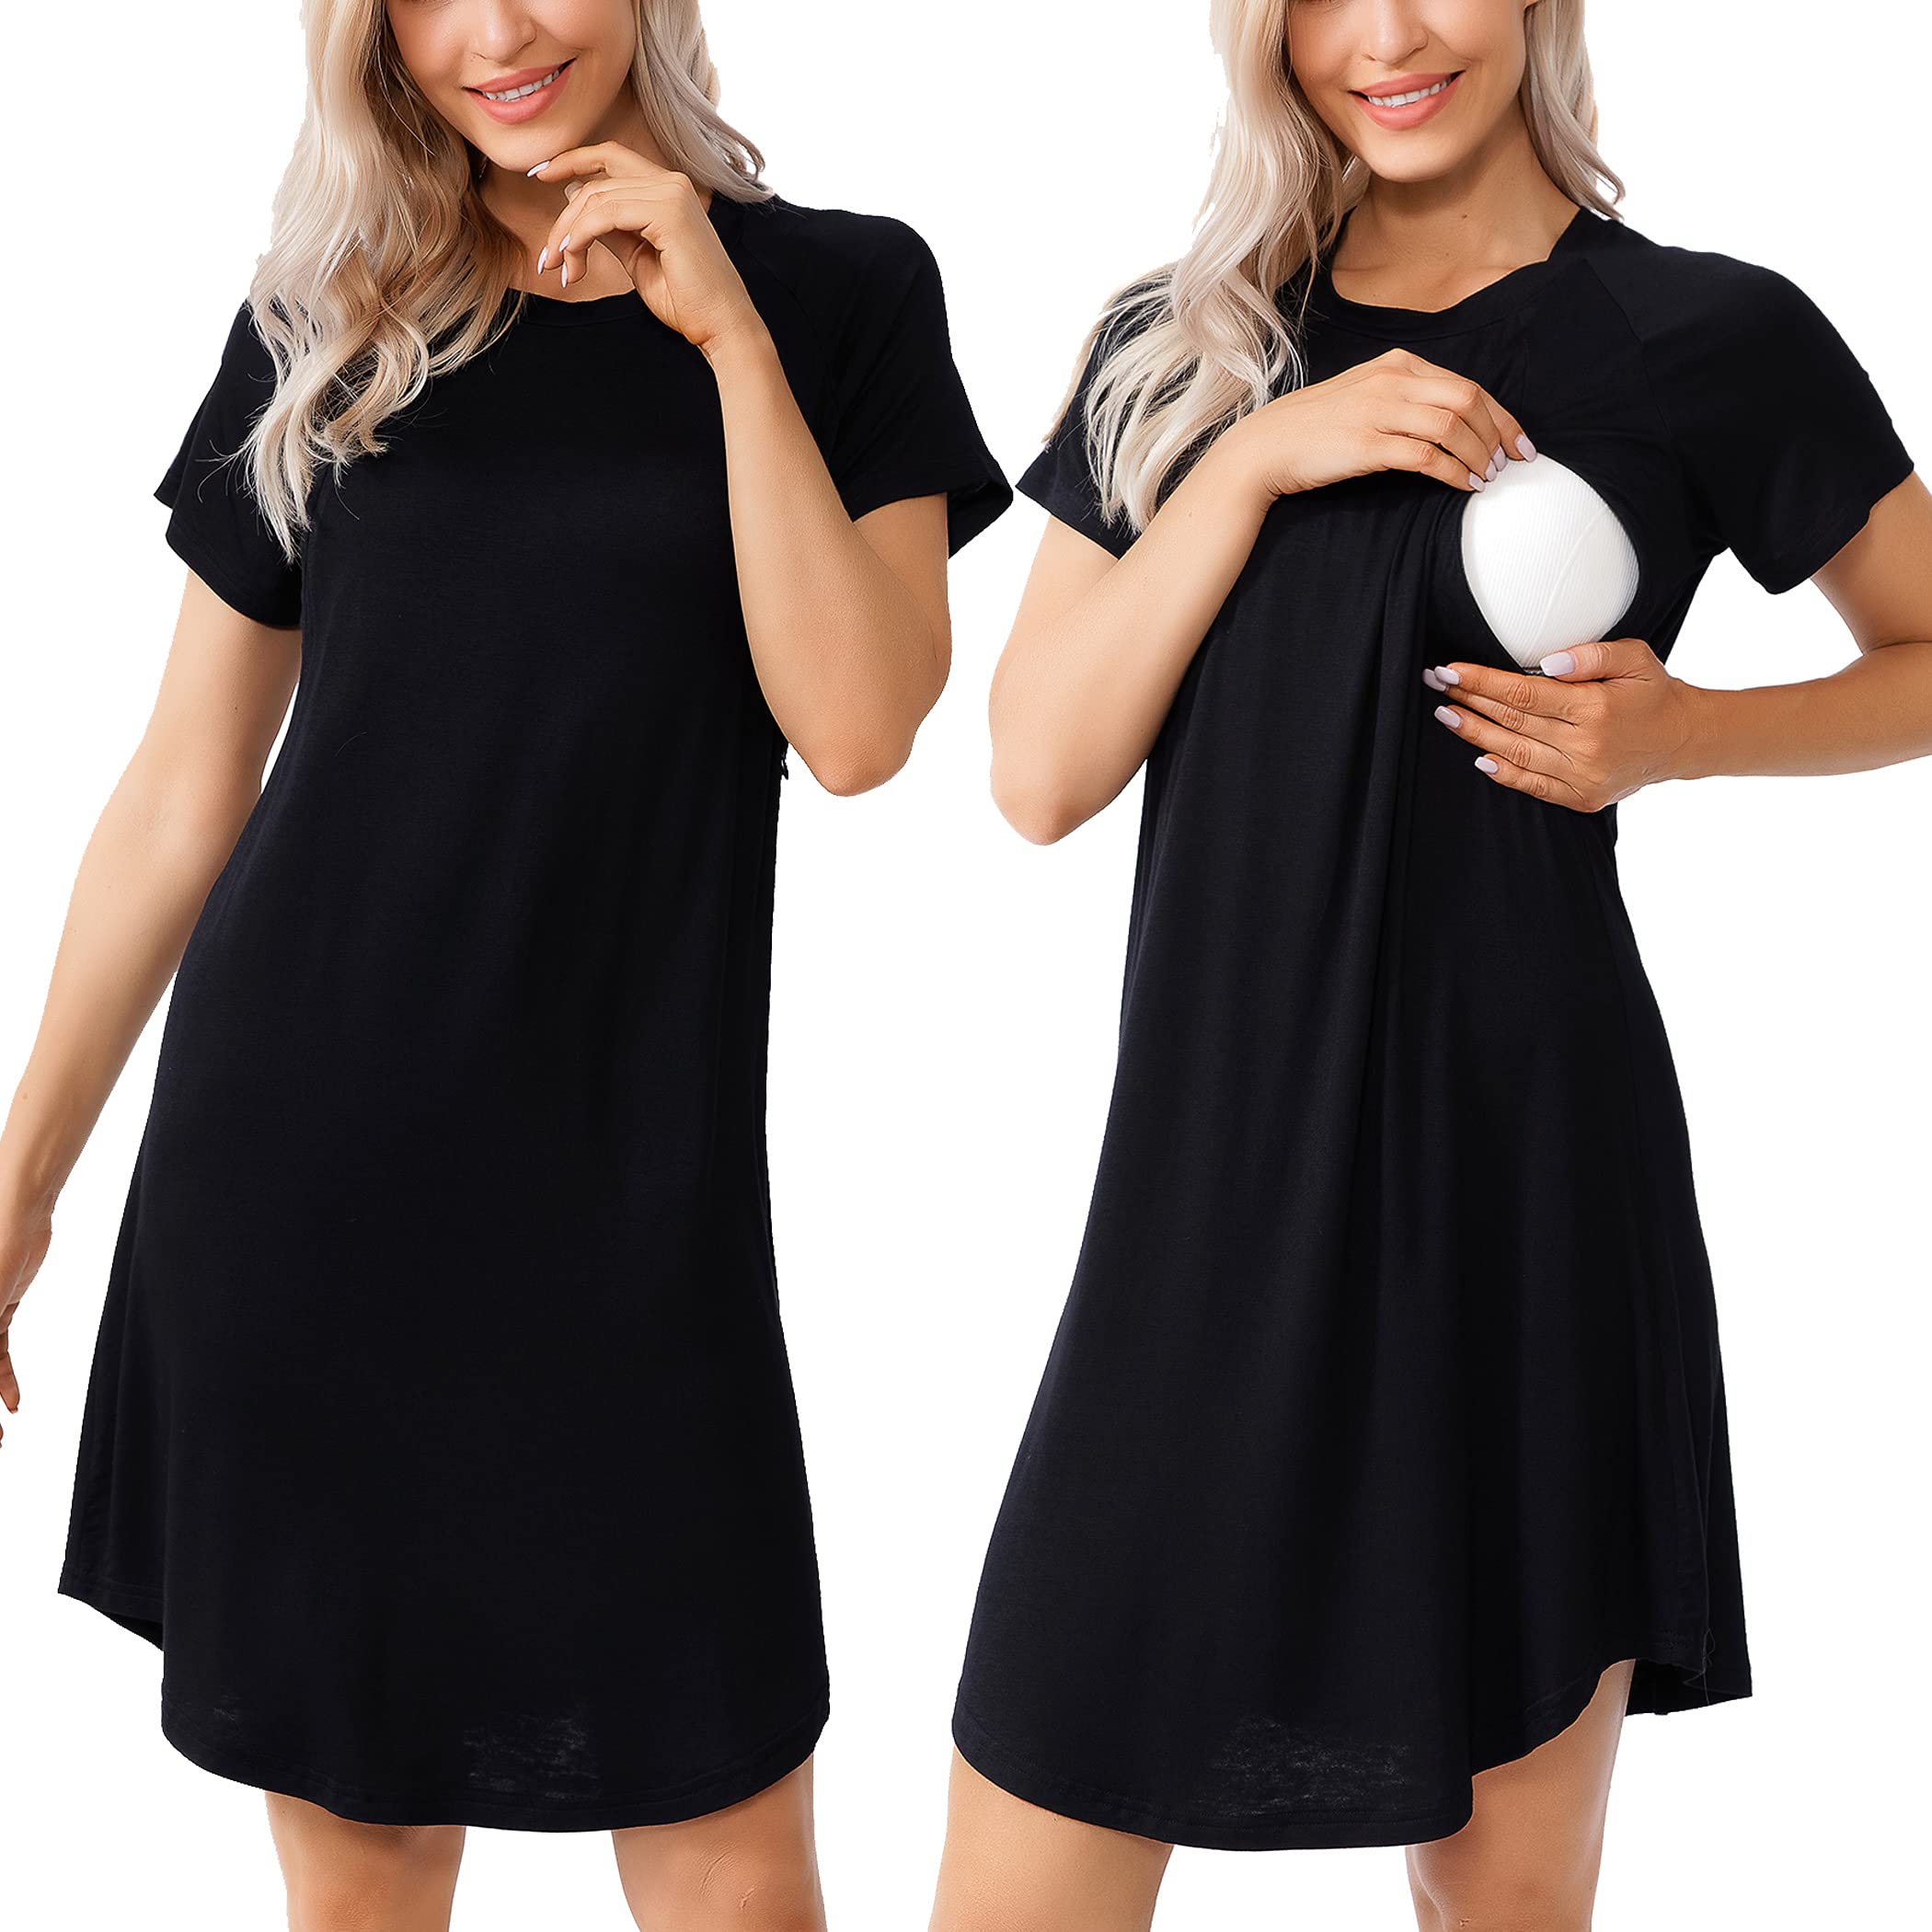 WoMear Women Sleepshirts 3 in 1 Delivery/Labor/Maternity/Nursing Nightgown Short Sleeve Breastfeeding Sleep Dress Pure Black L